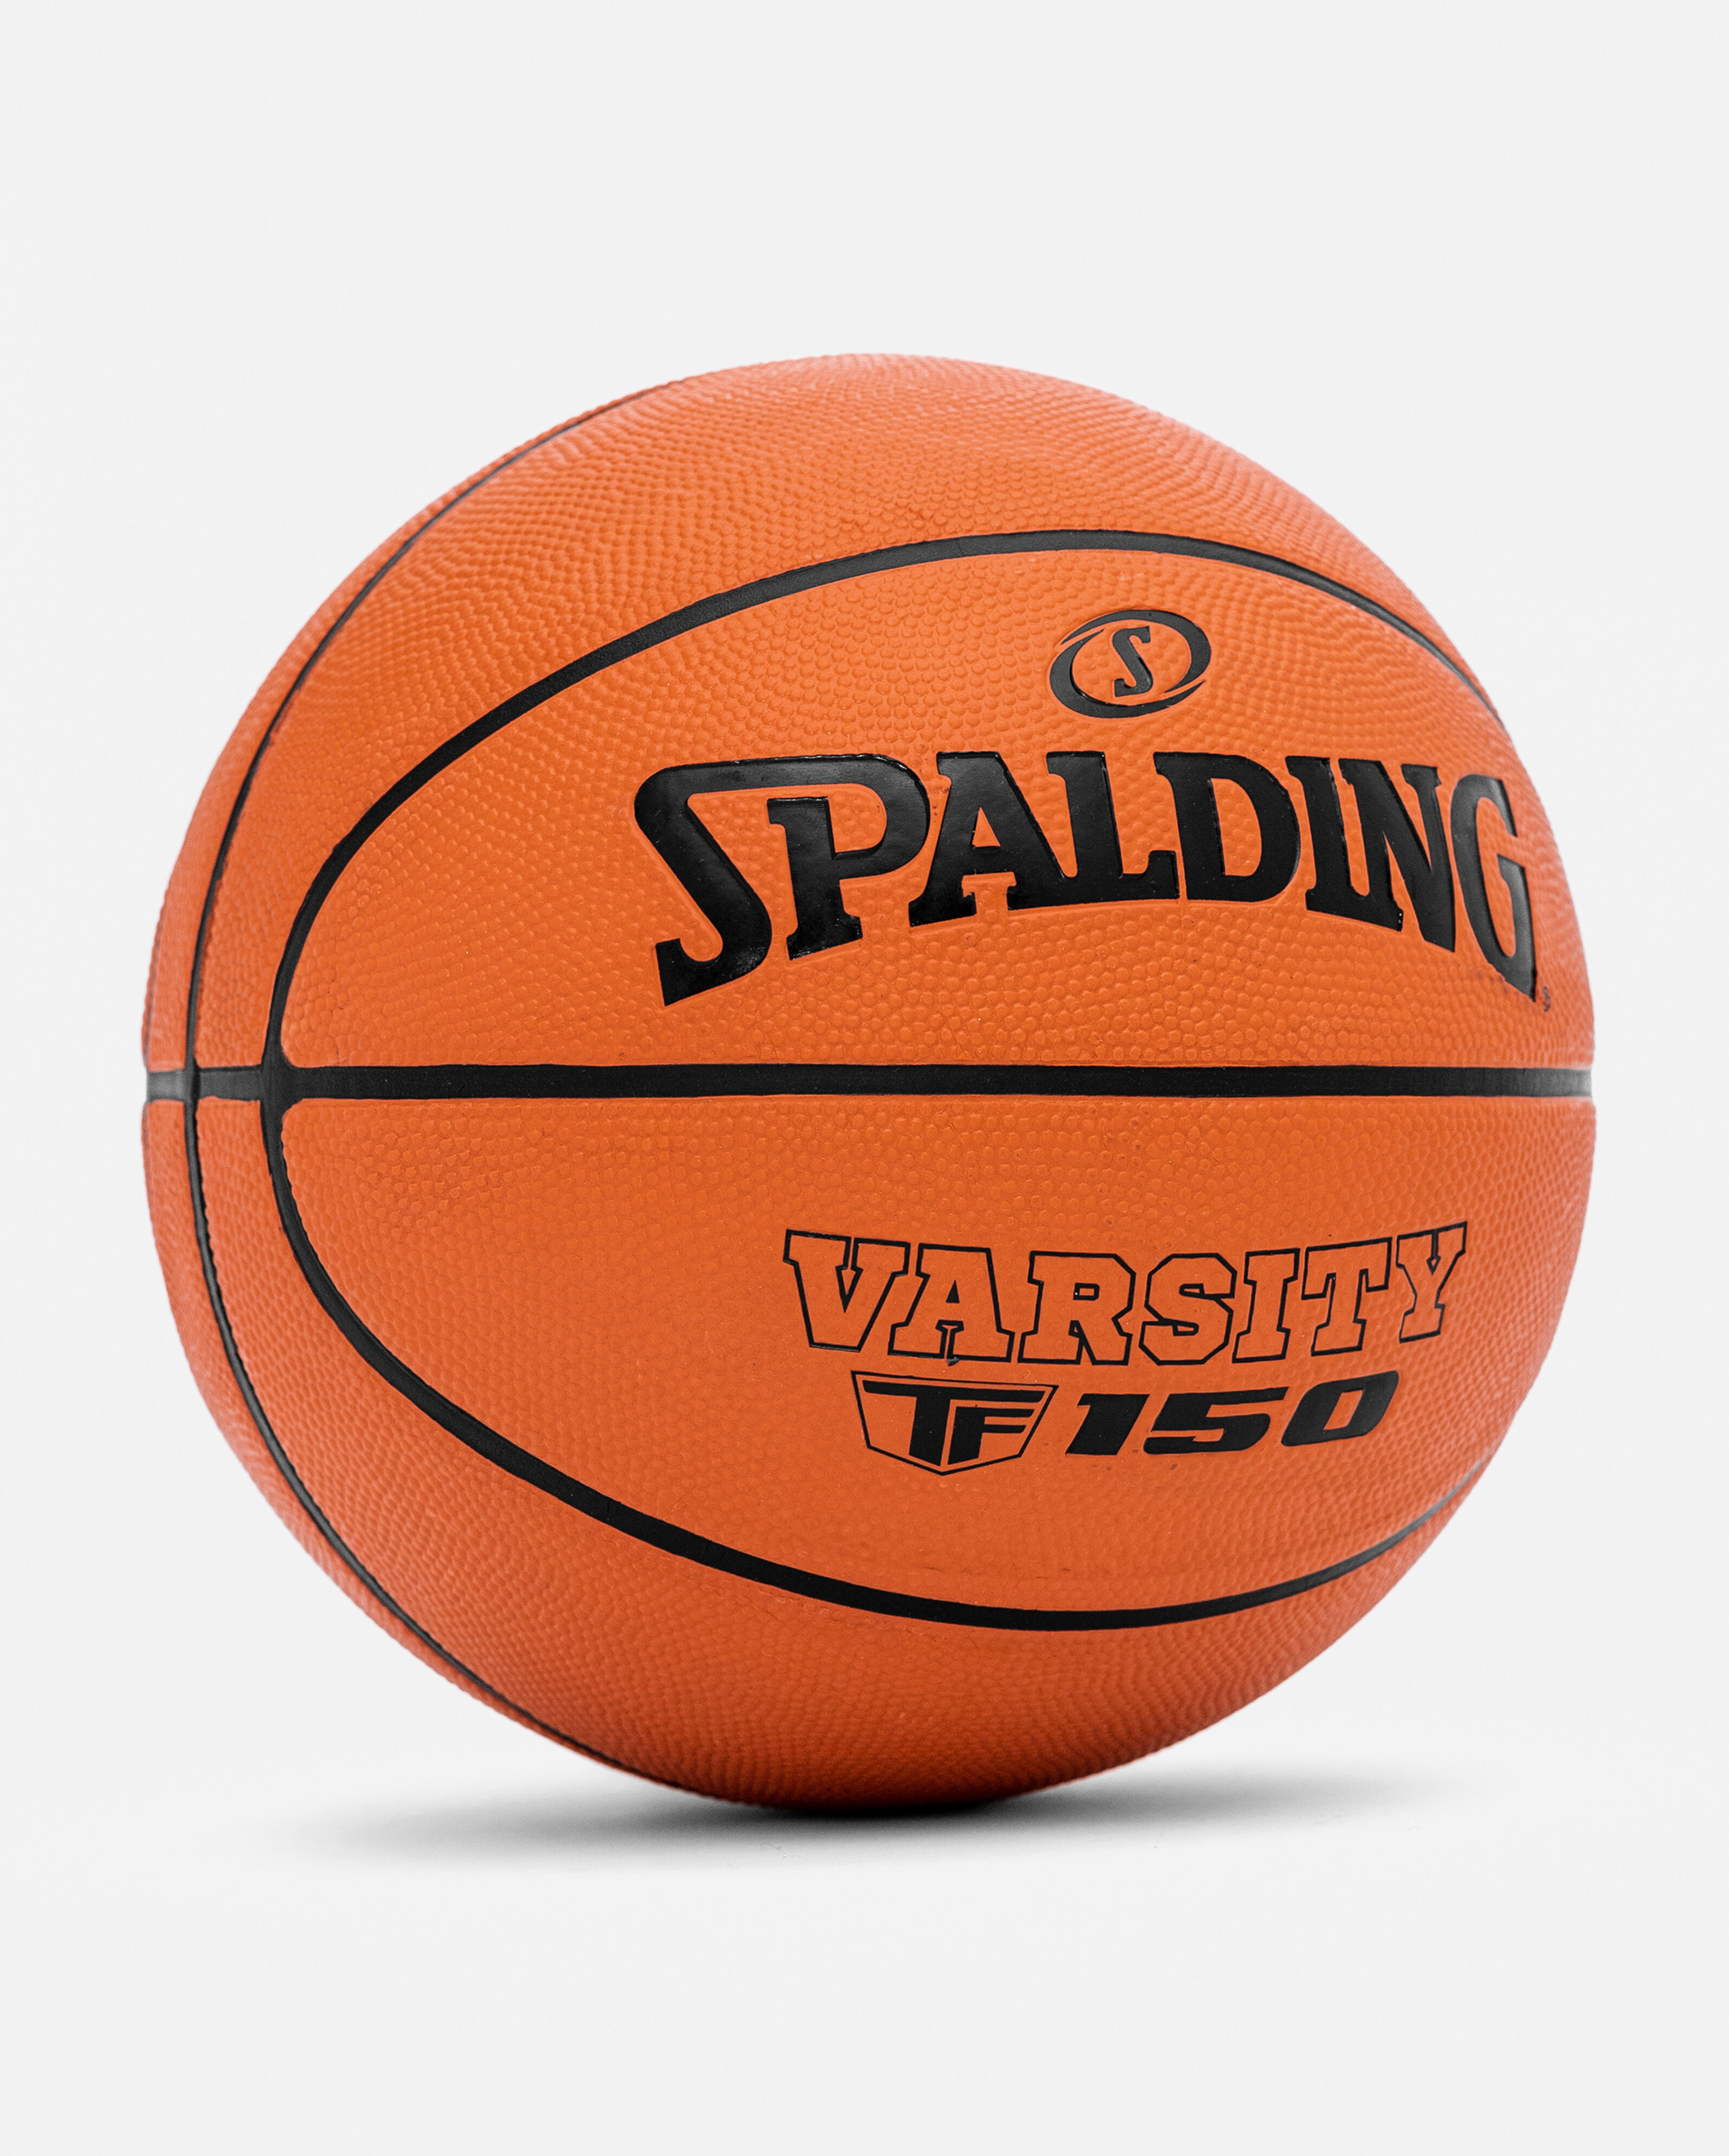 Spalding Dbb Tf150 Basketball Ball 